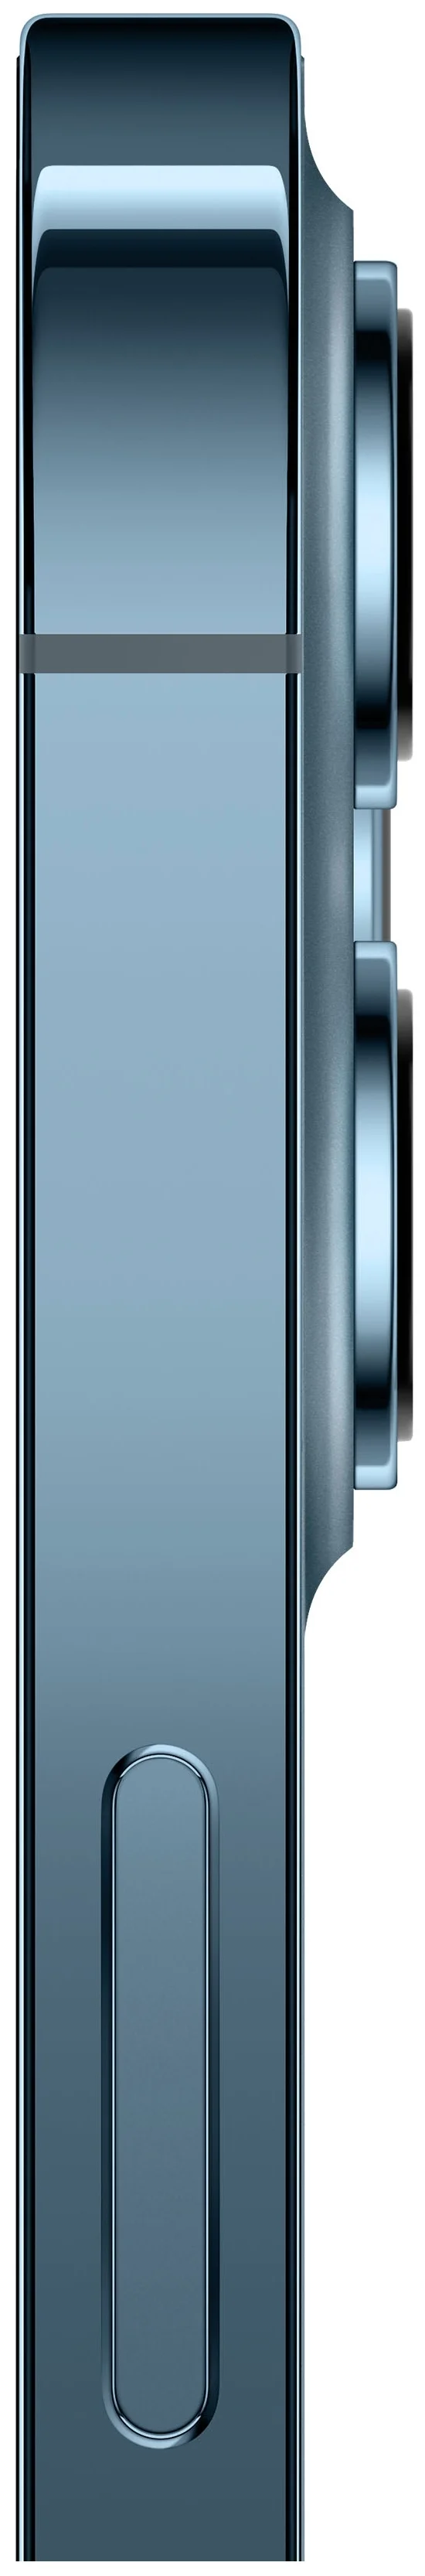 Apple iPhone 12 Pro Max 256GB - аккумулятор: 3687 мА·ч